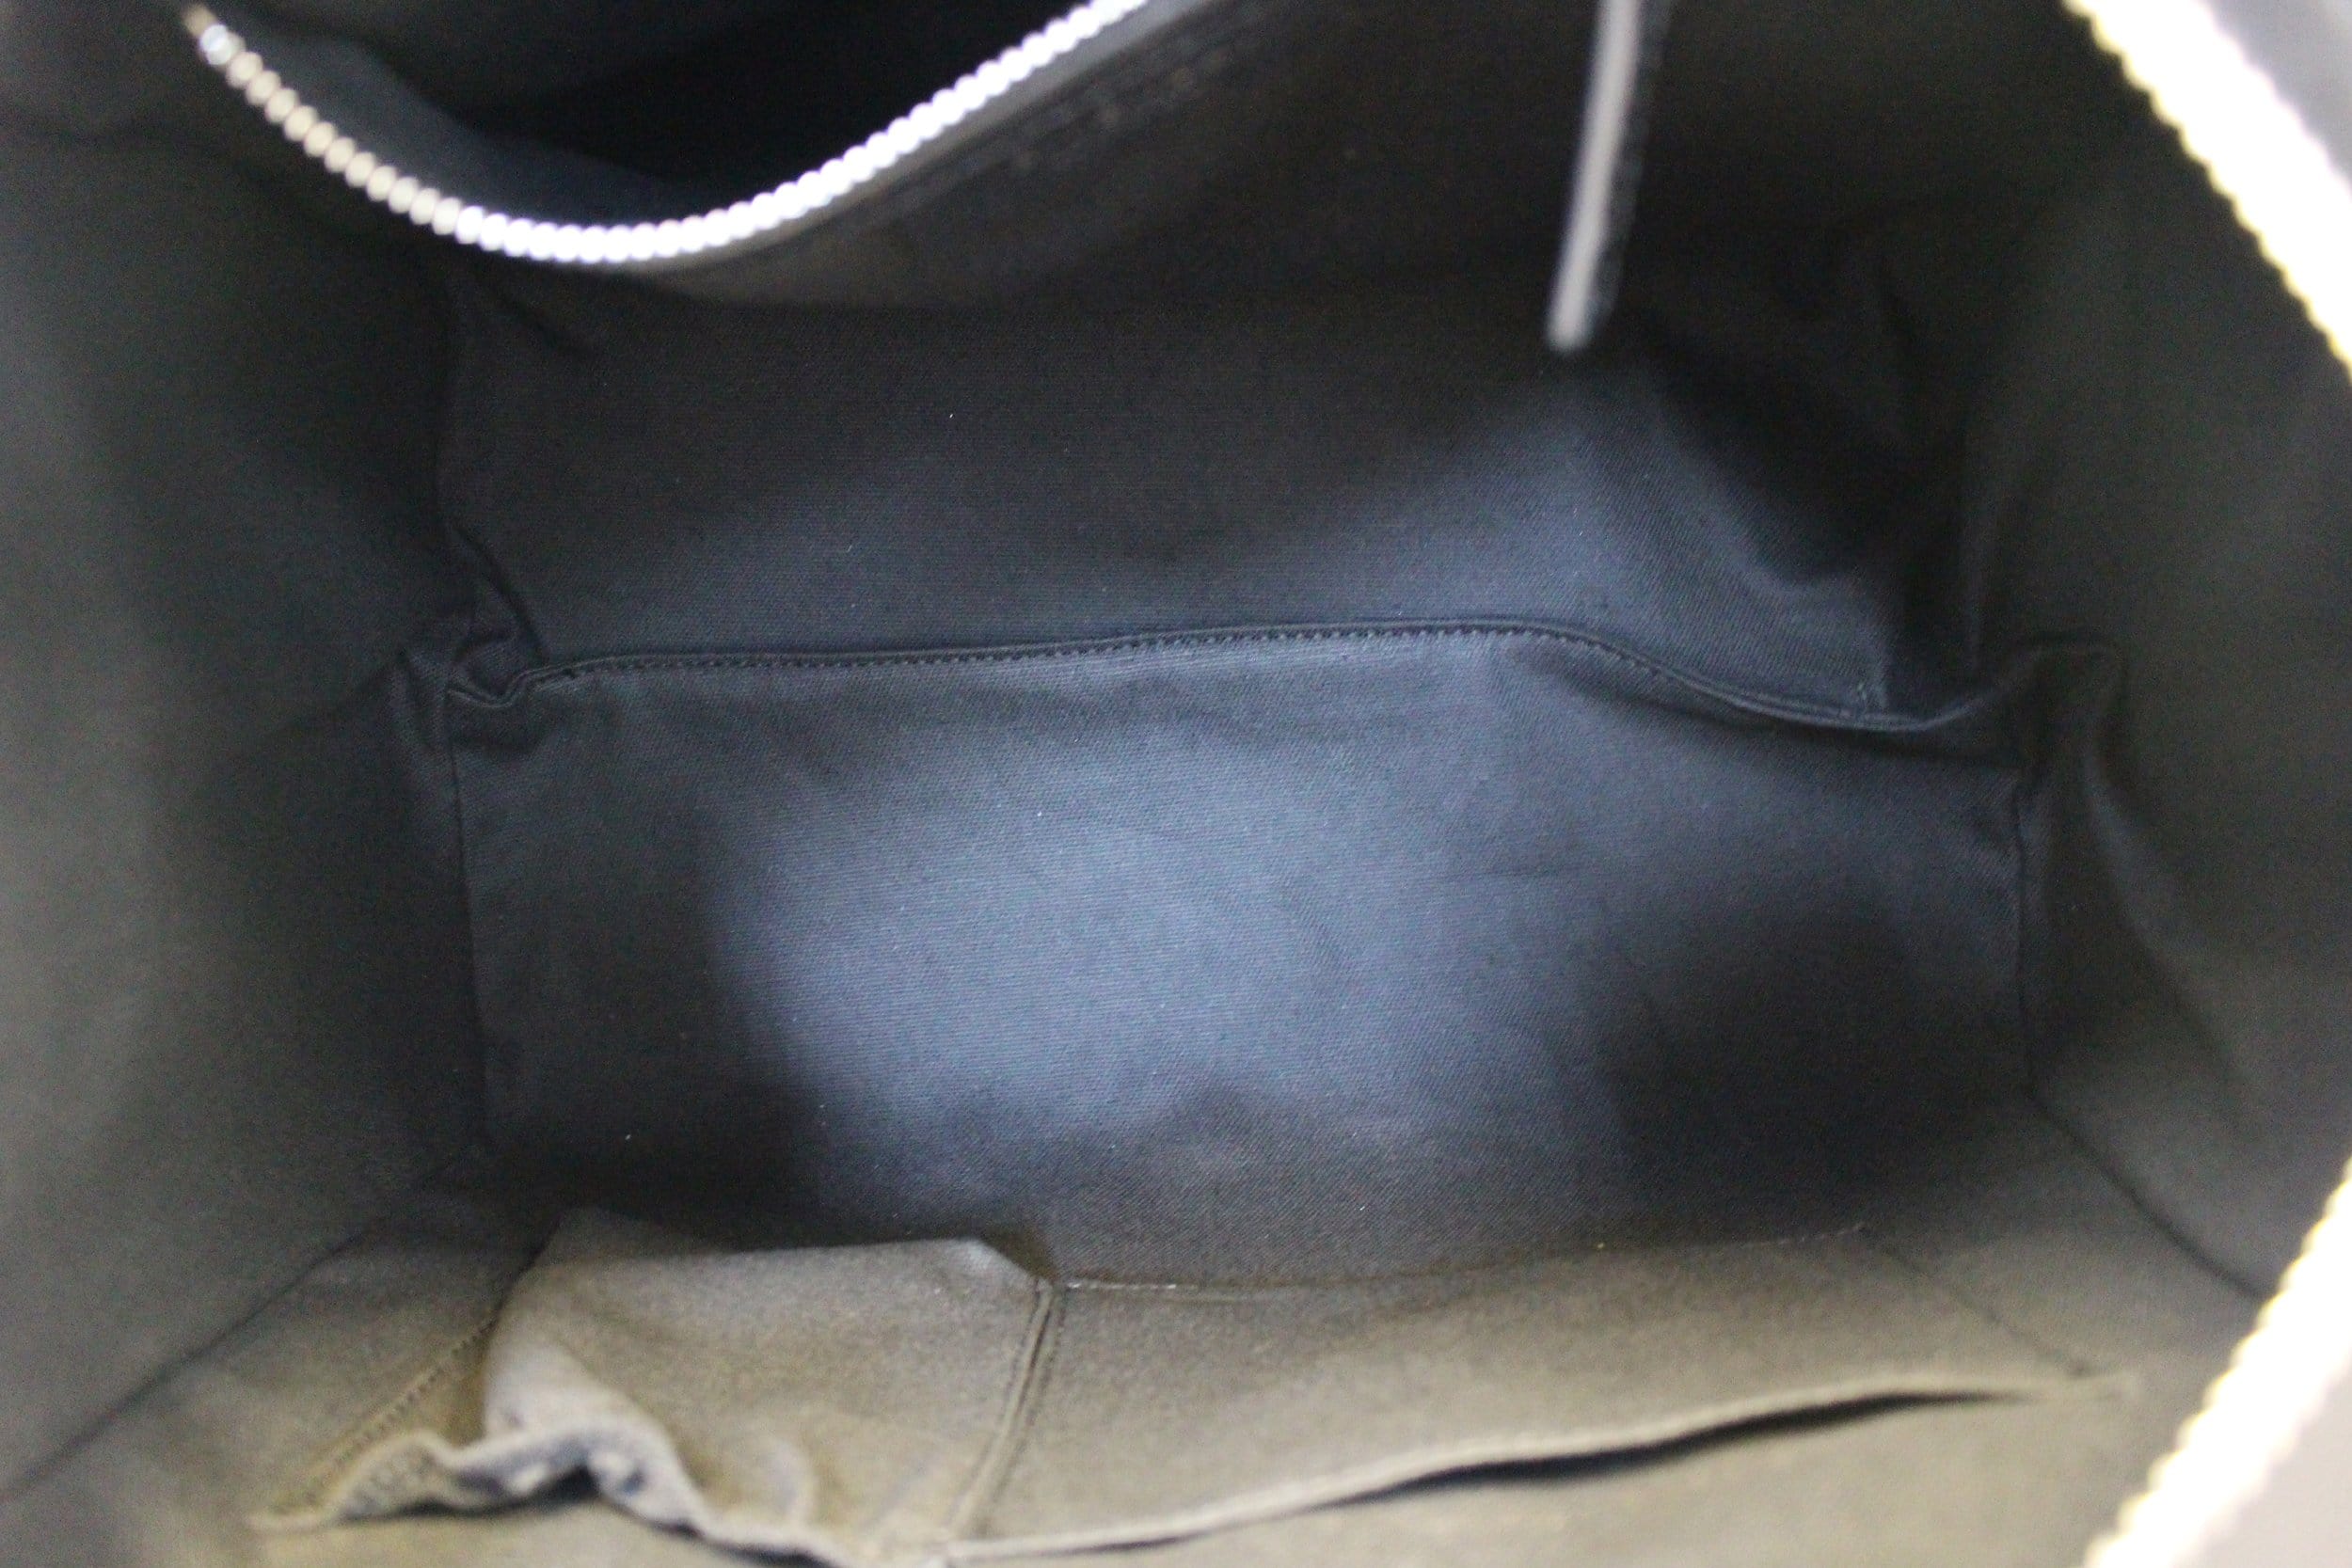 Antigona leather handbag Givenchy Black in Leather - 37336791